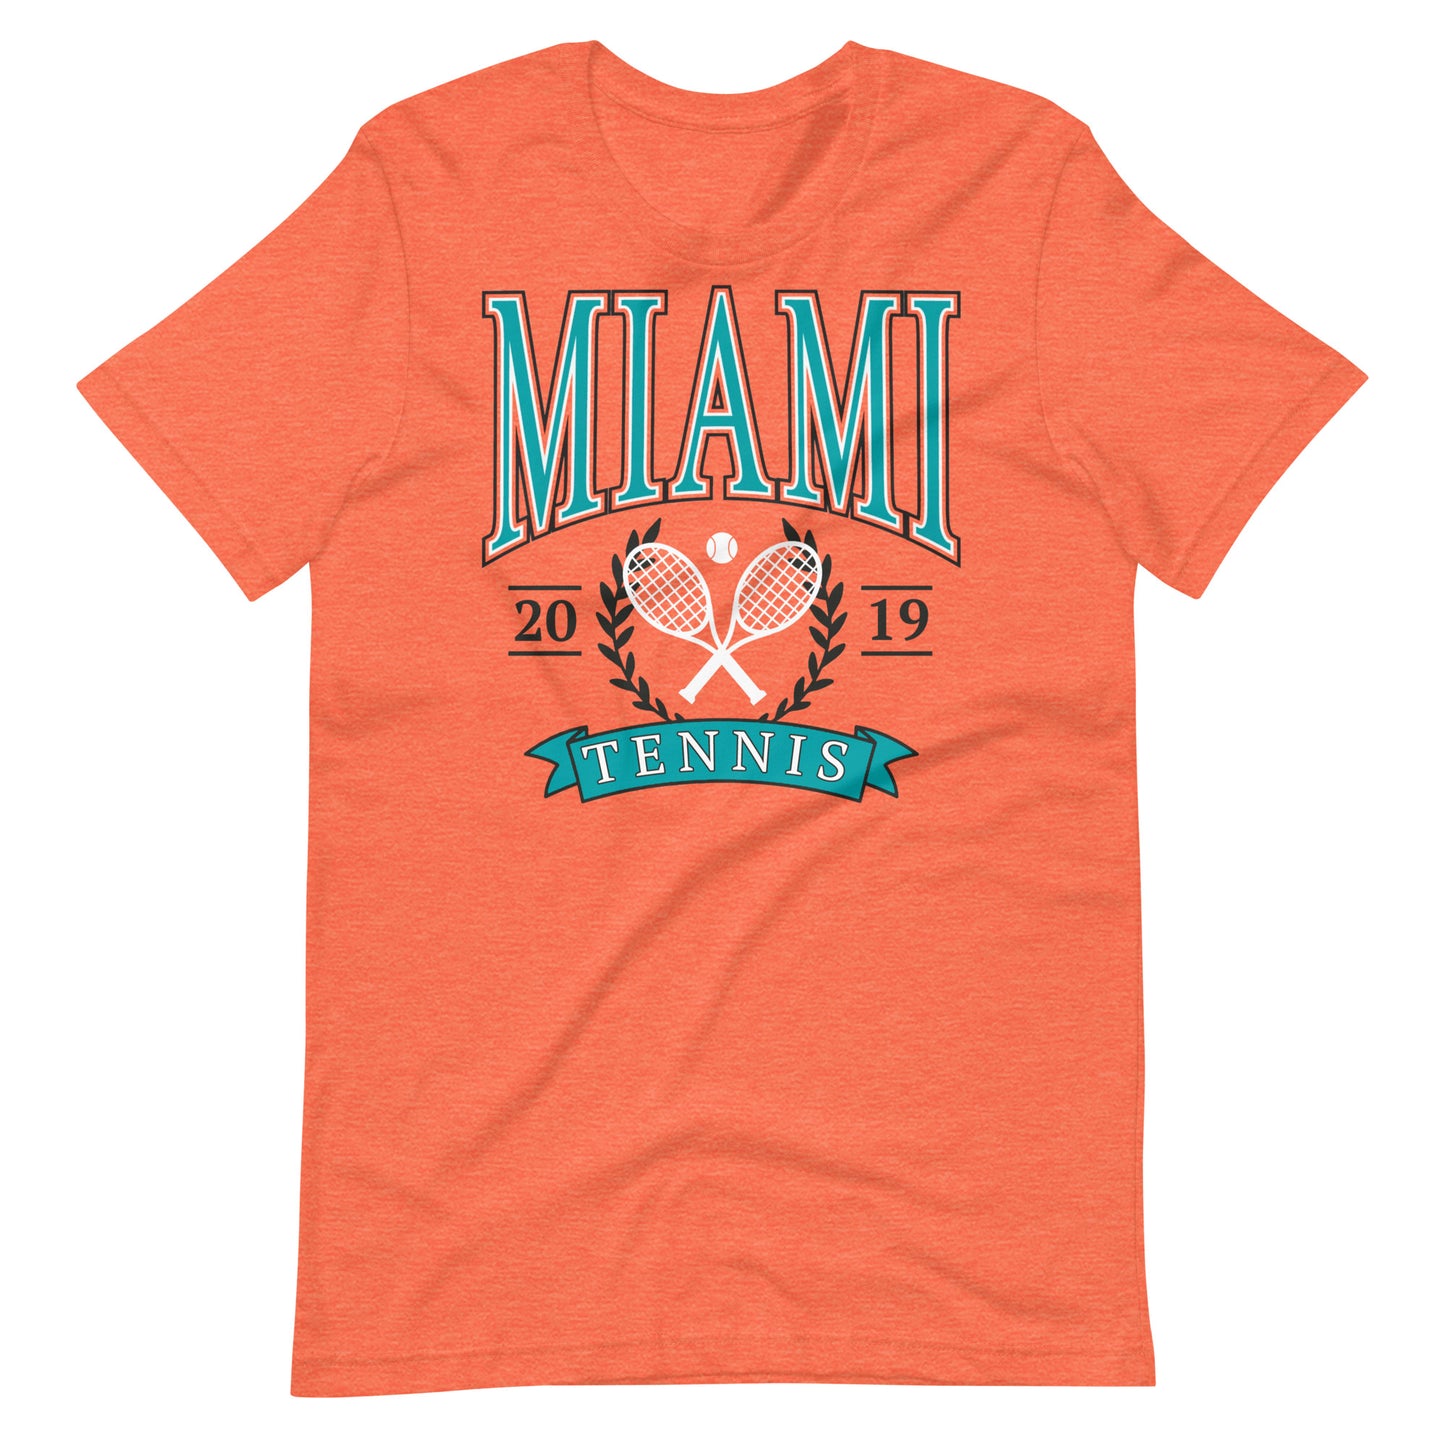 Miami Tennis unisex shirt